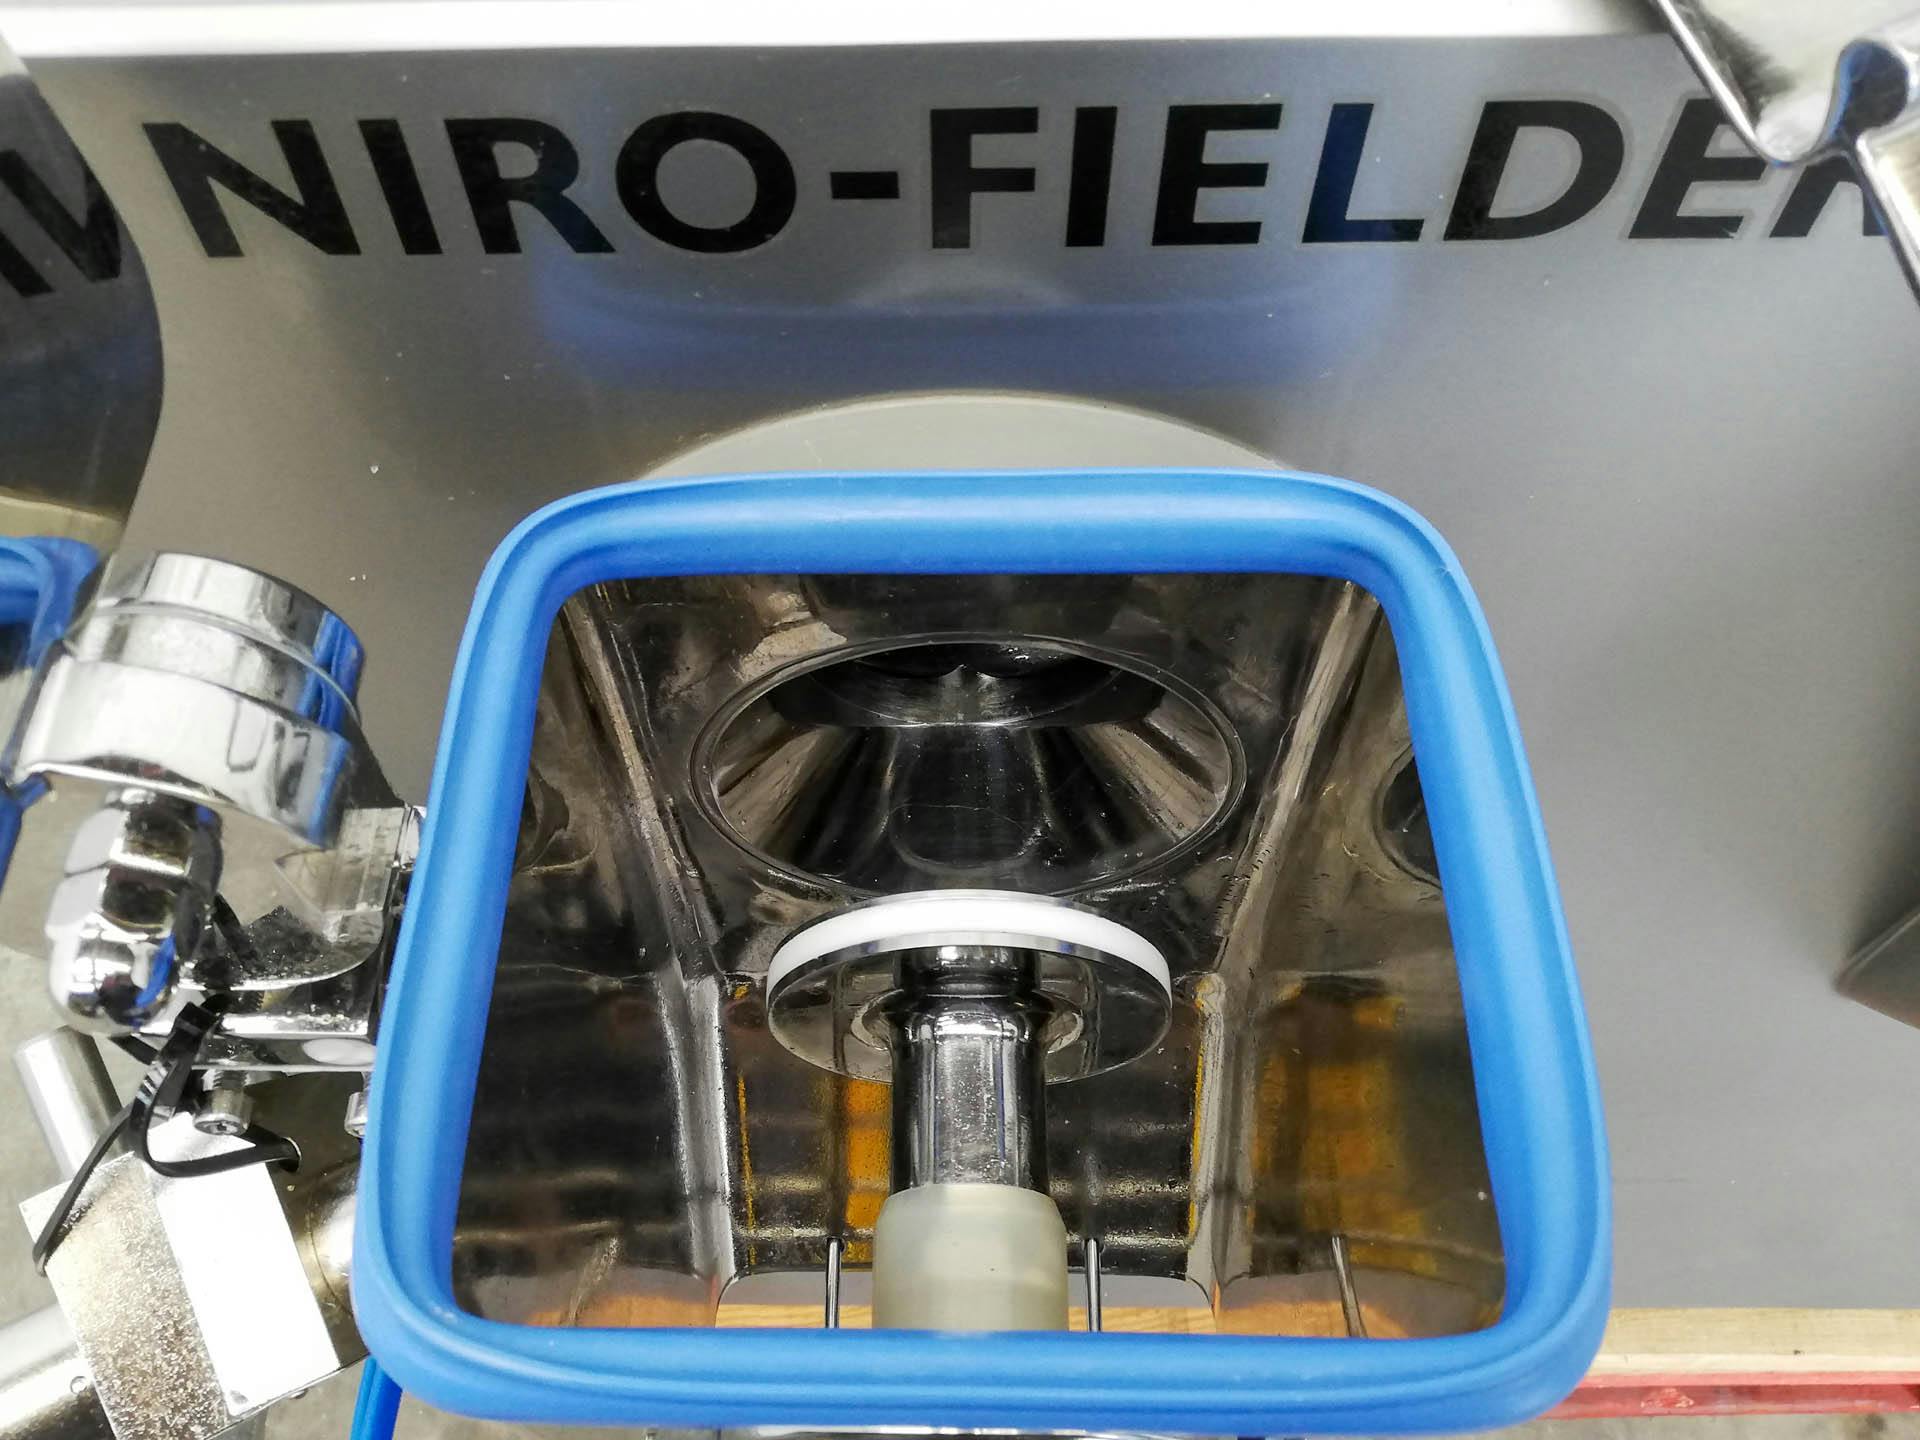 Niro Fielder PMA-25 - Universal mixer - image 7